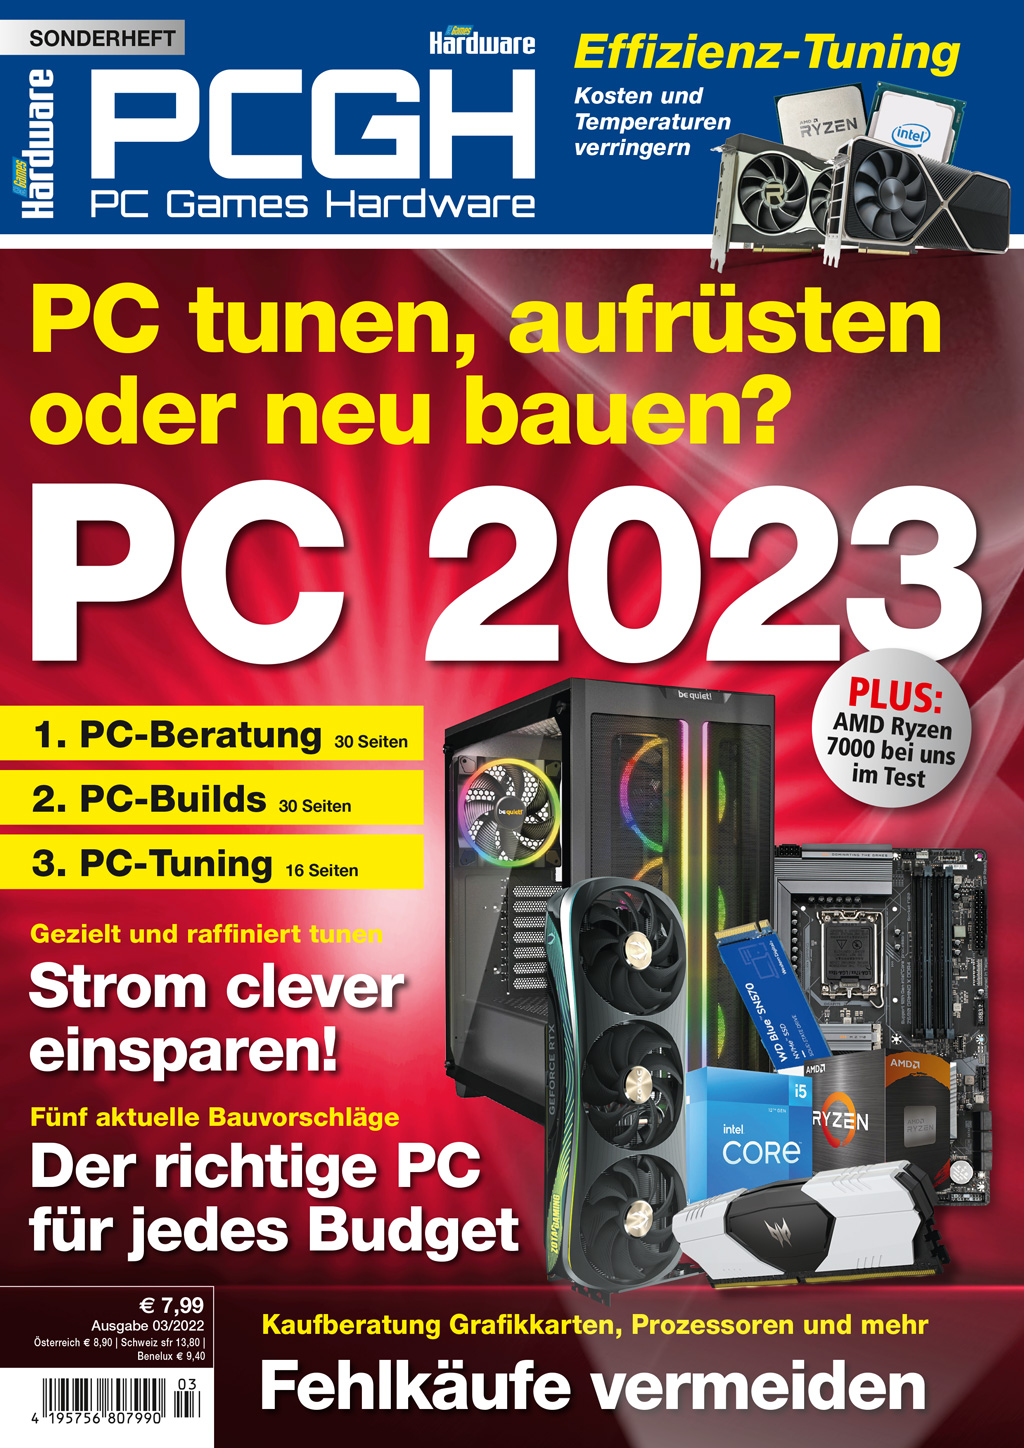 PCGH Sonderheft ePaper 03/2022